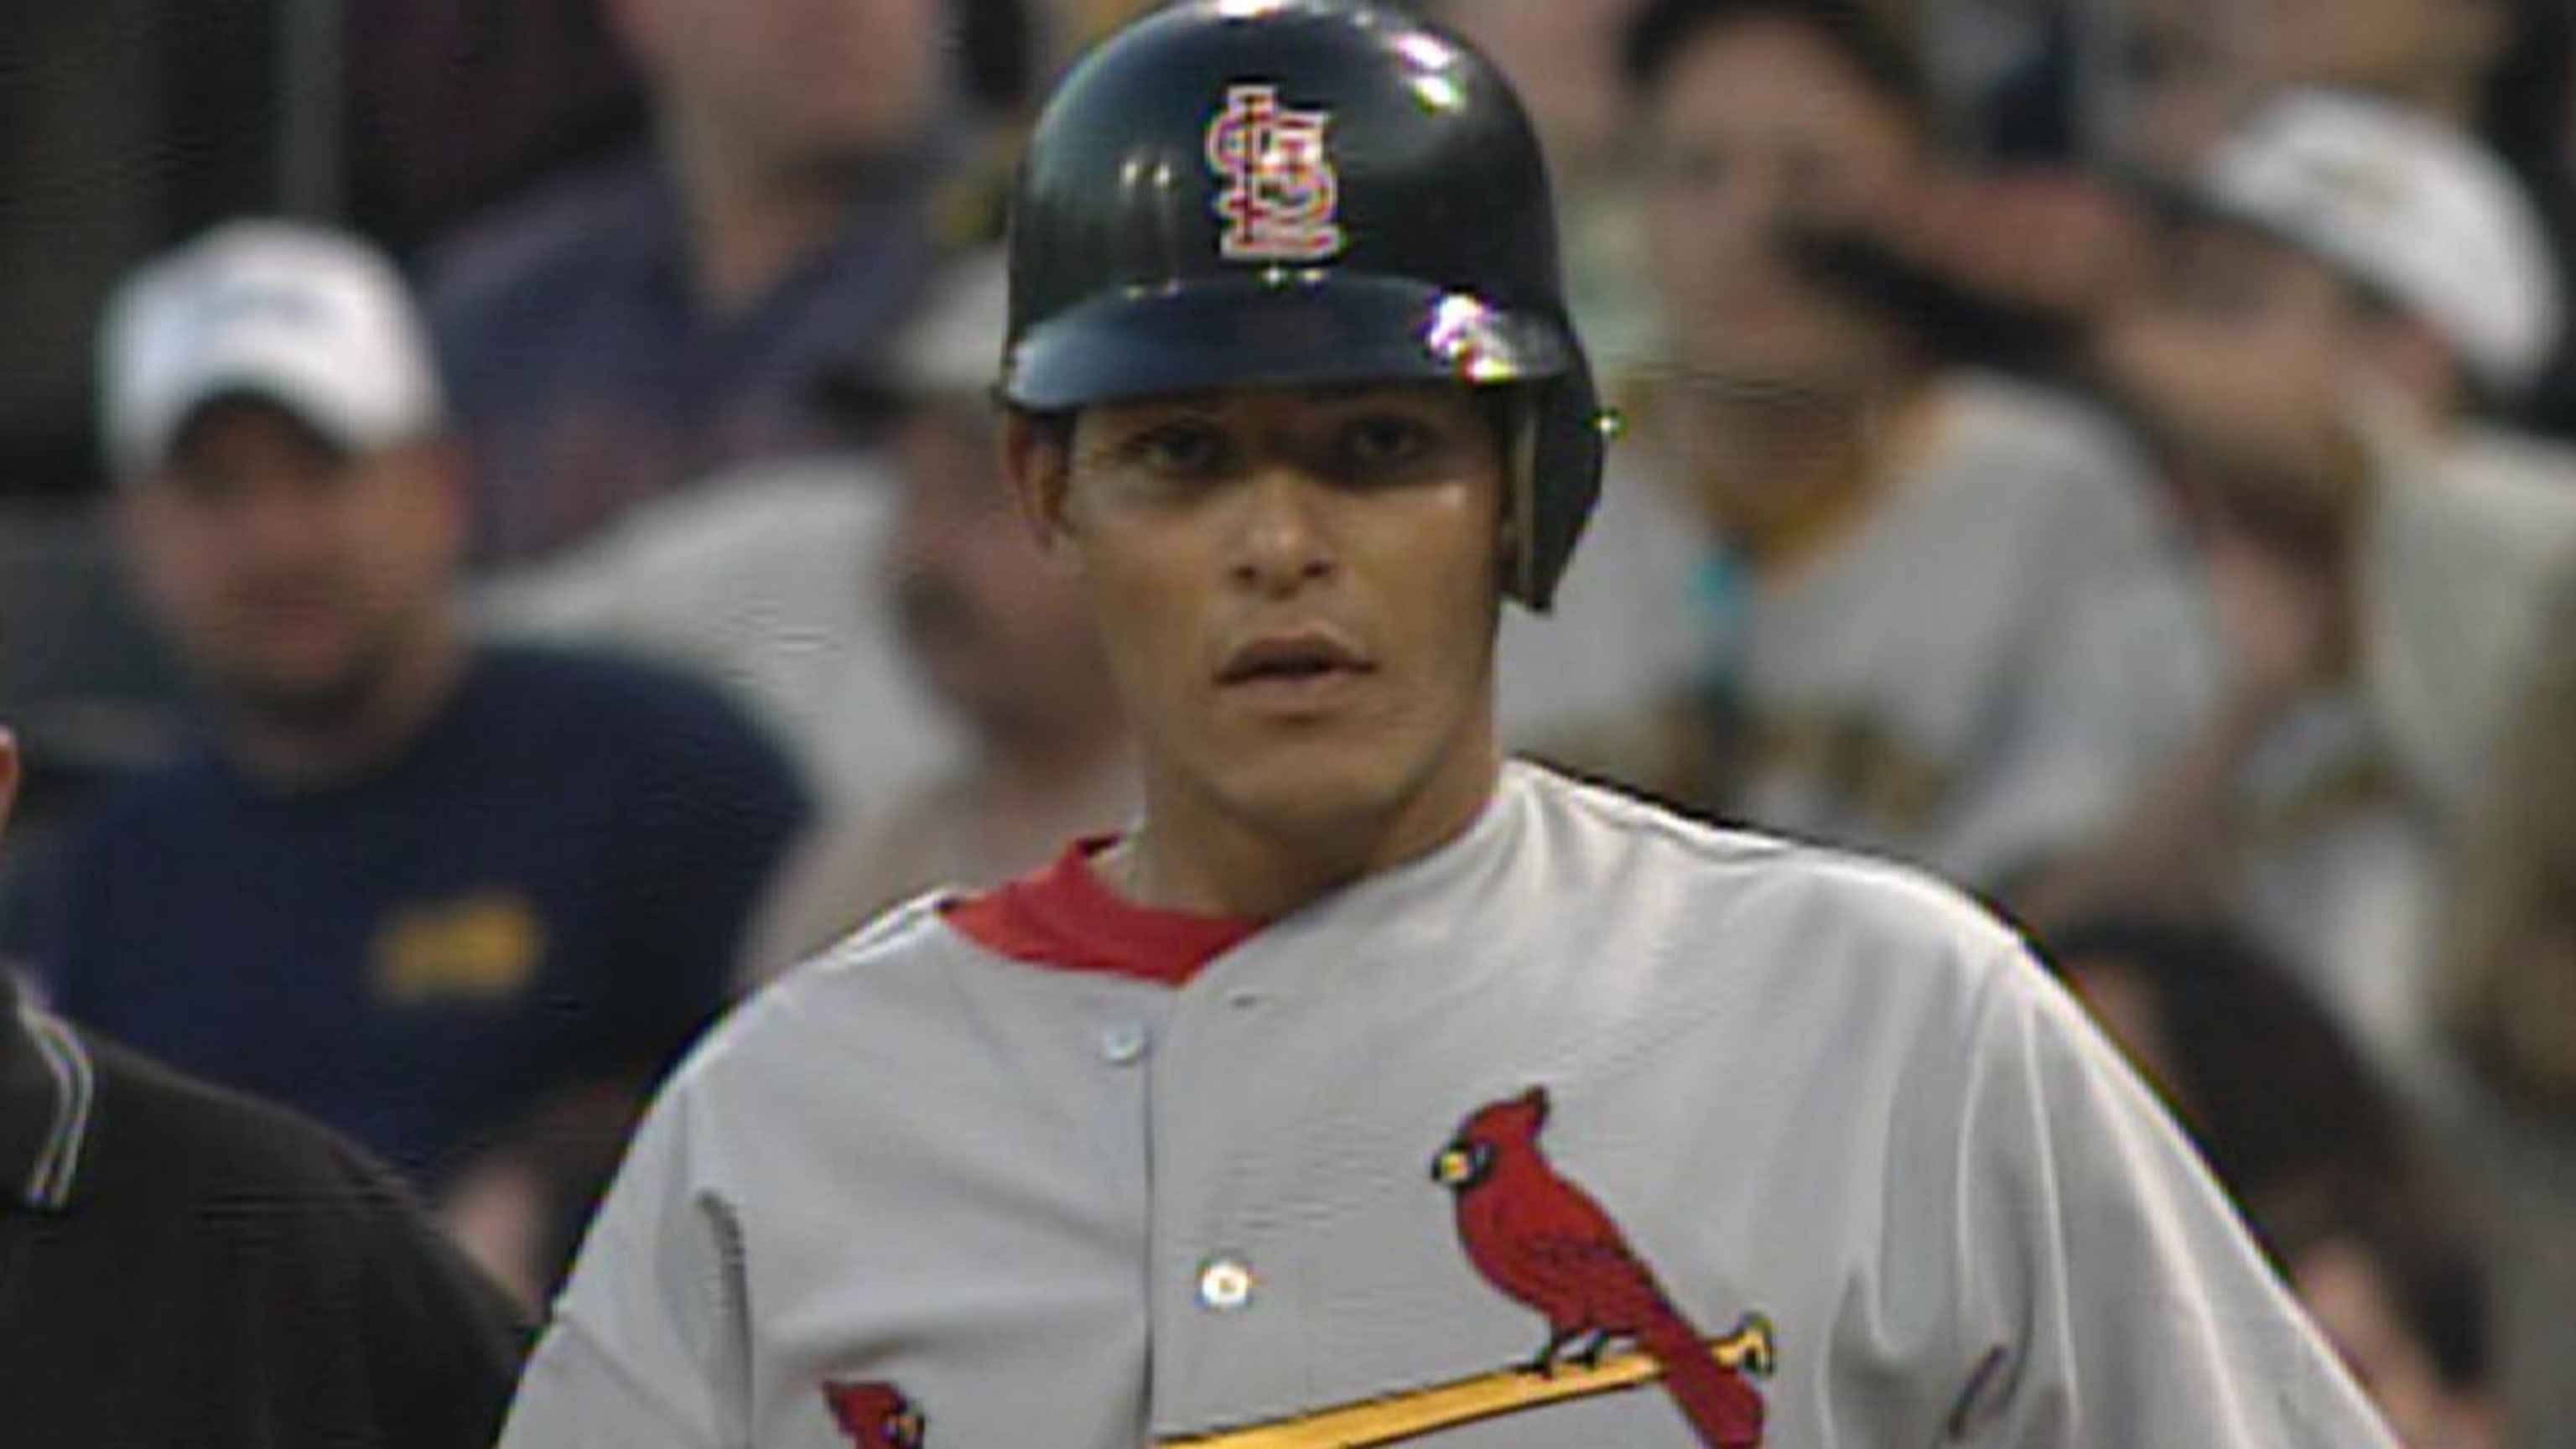 Molina's first big league hit